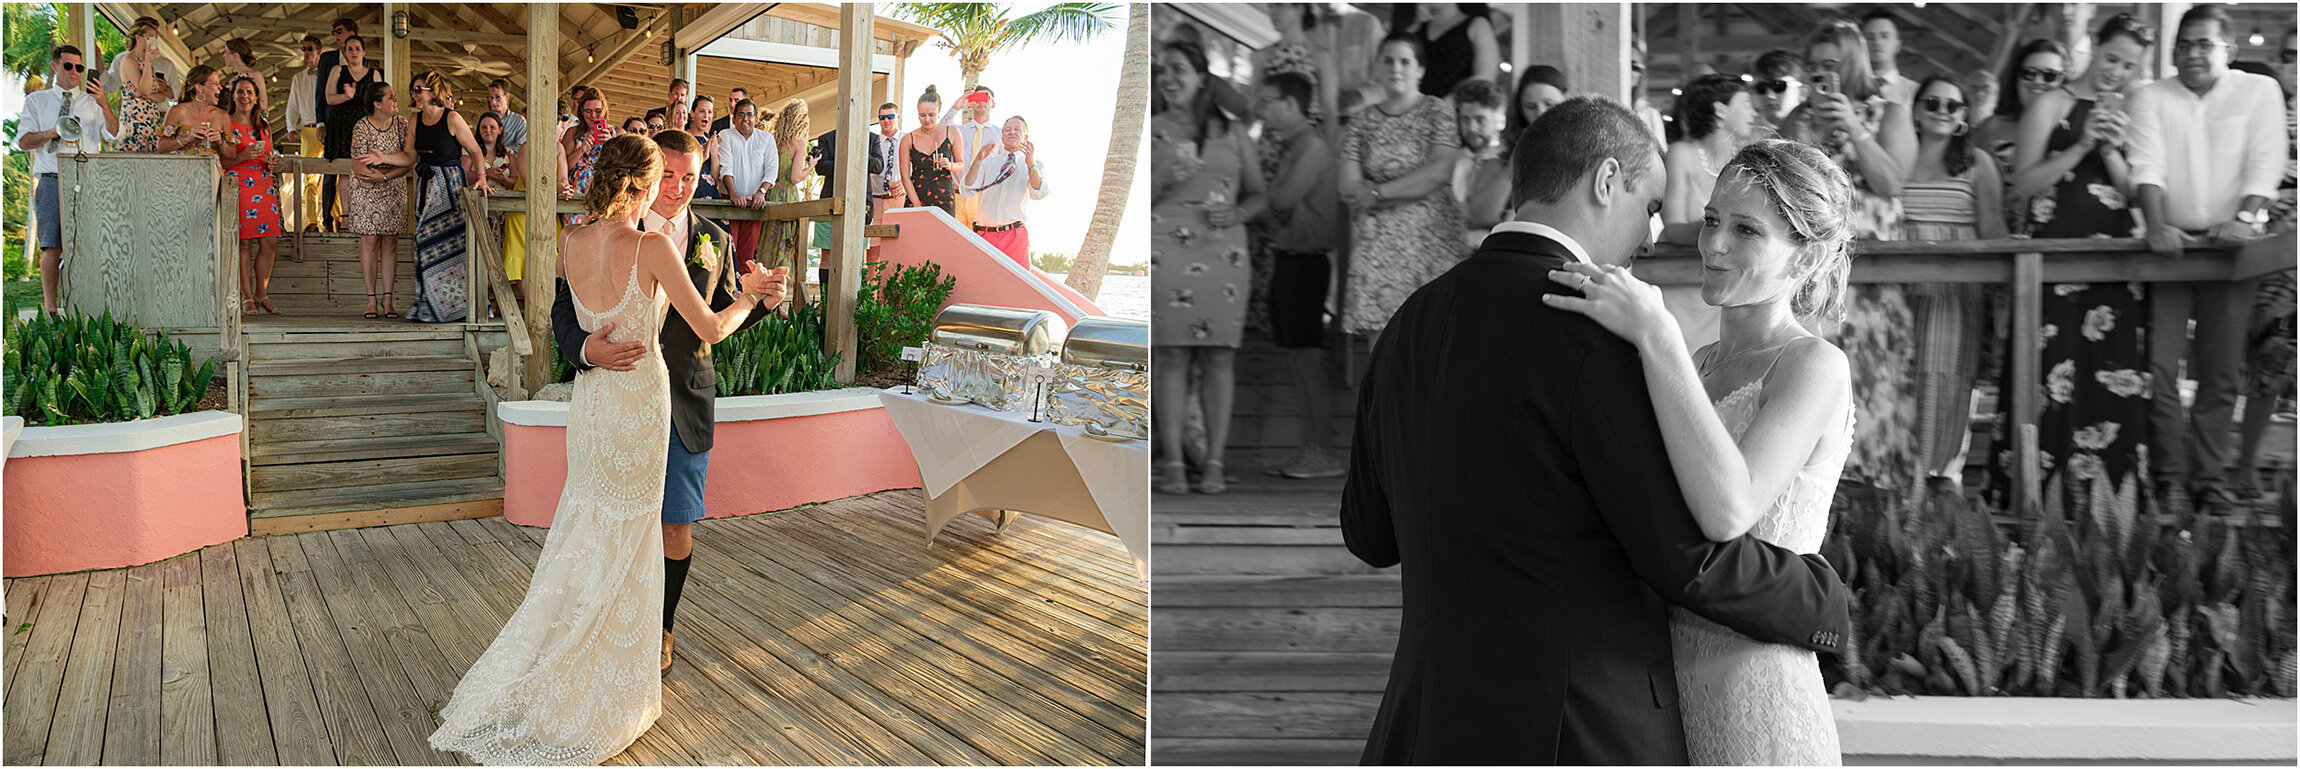 Cambridge Beaches Bermuda_Wedding Photographer_©FianderFoto_105.jpg